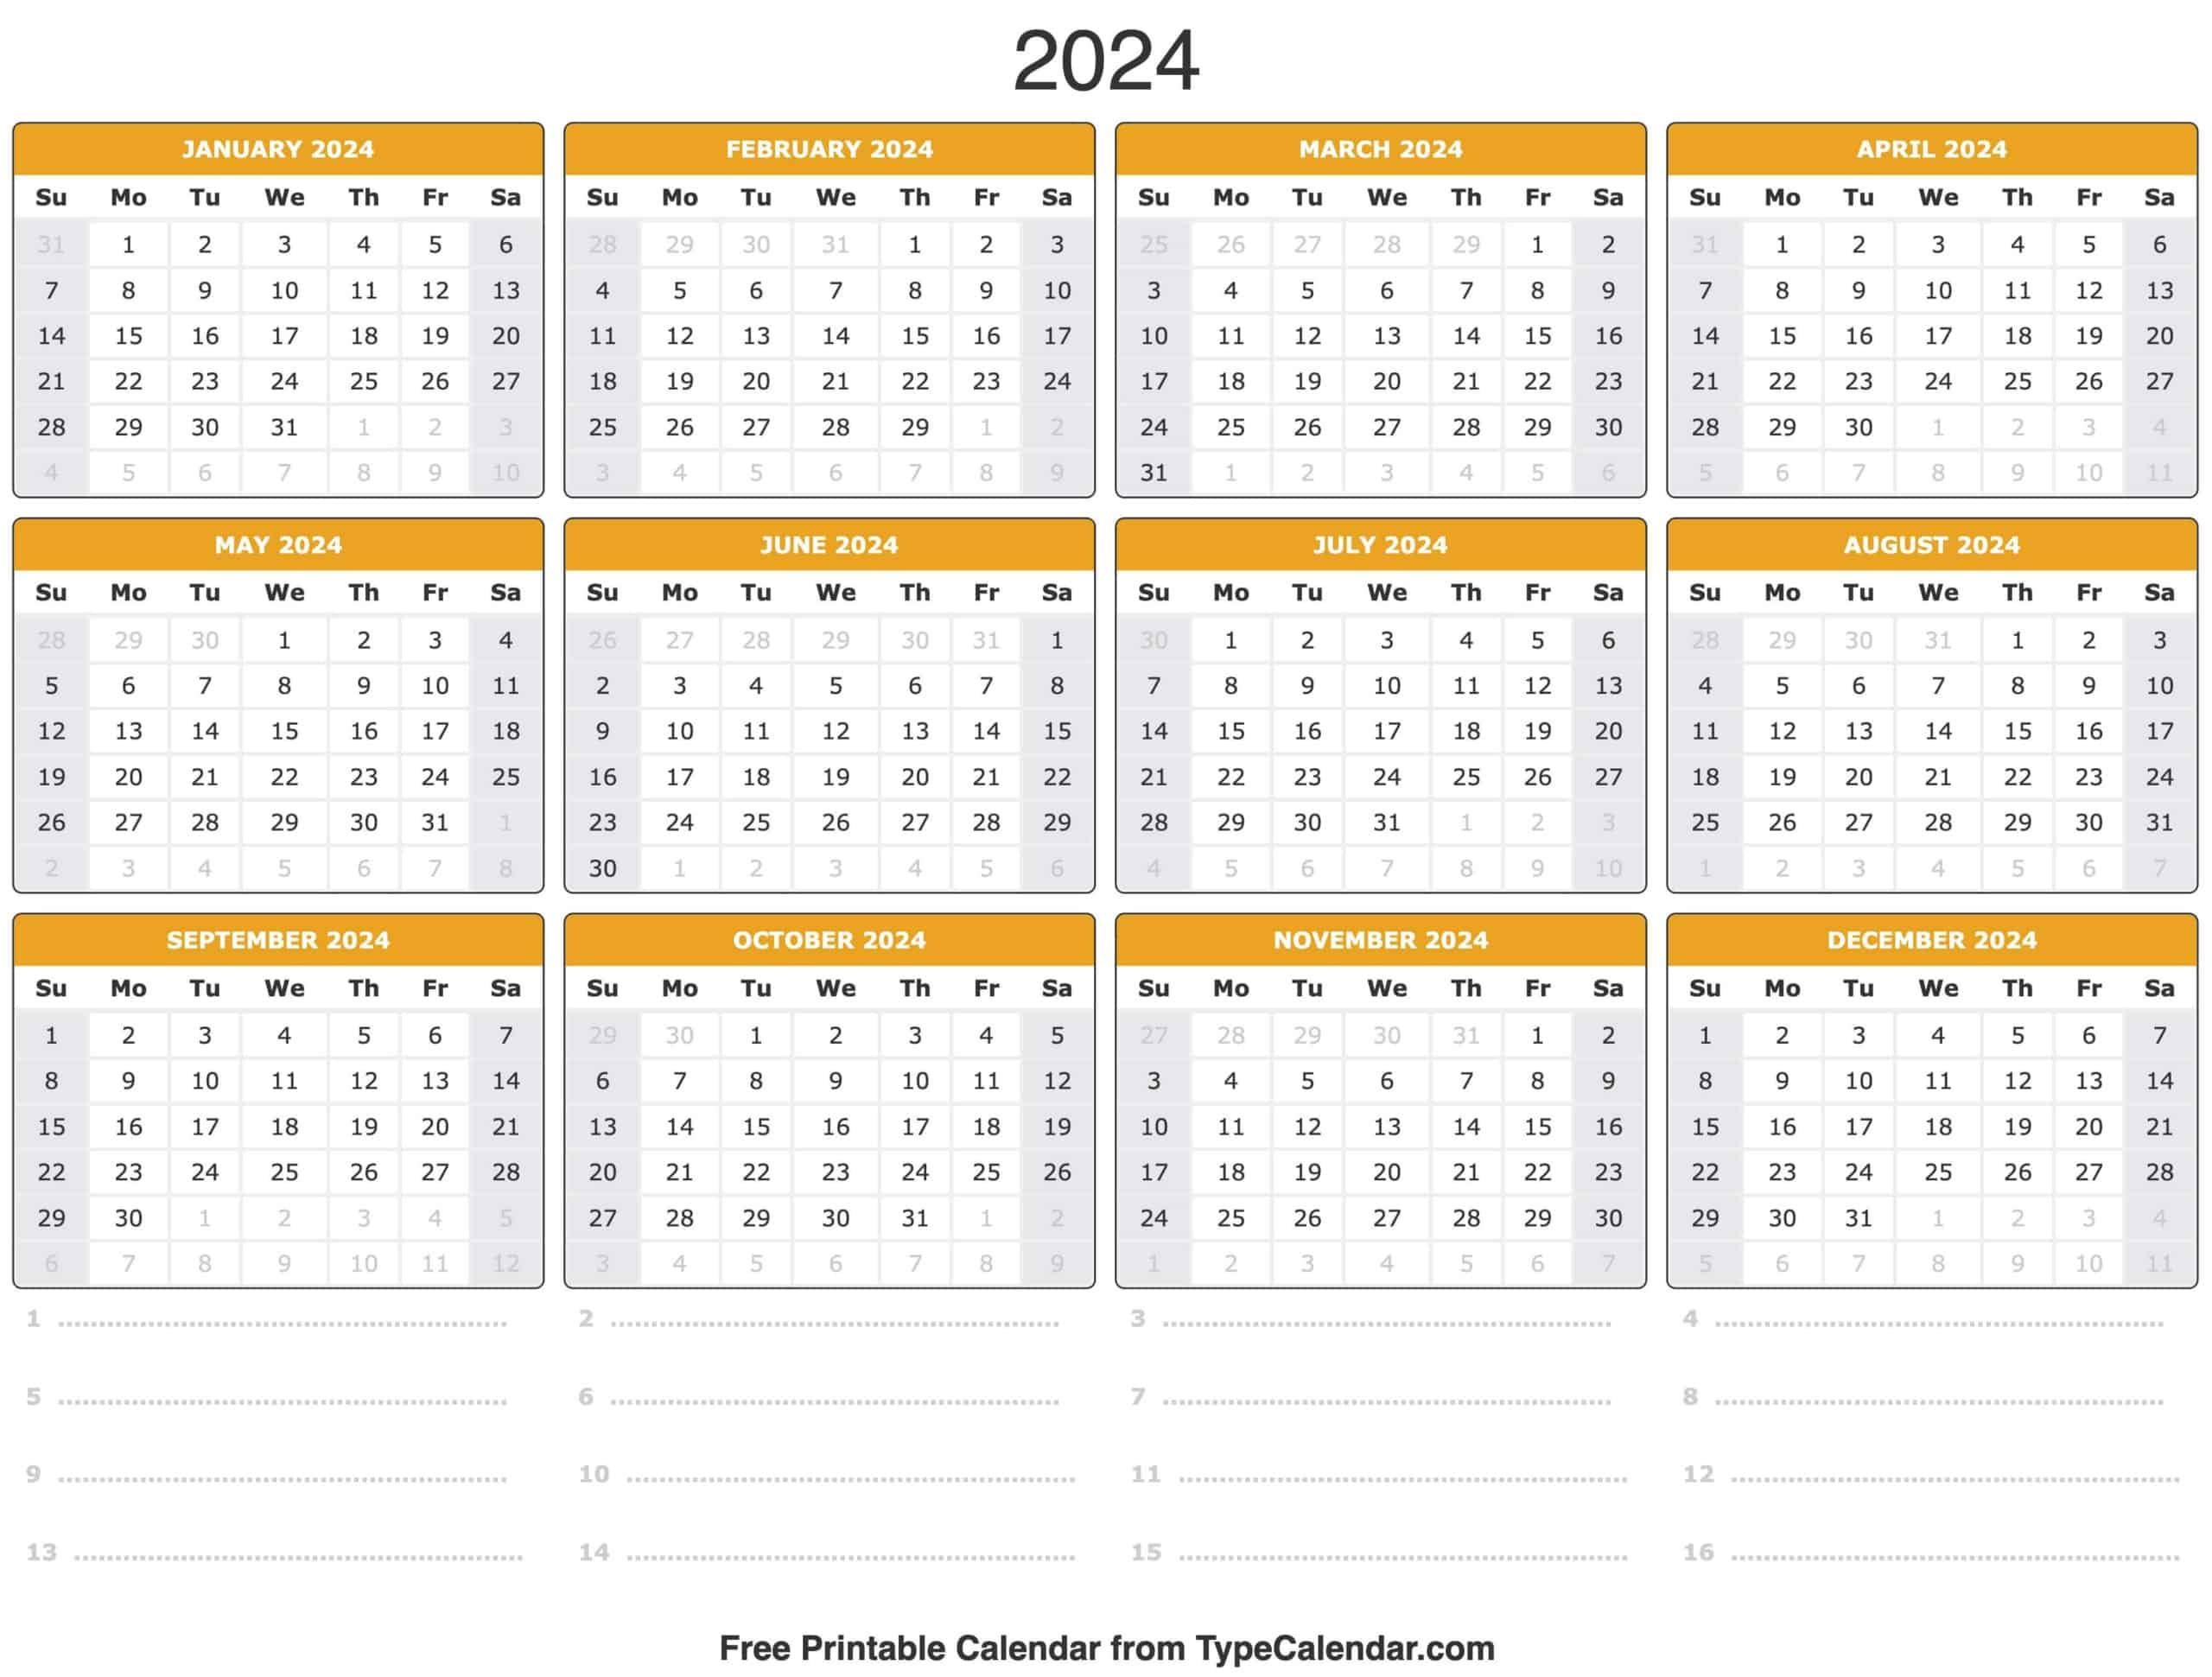 2024 Calendar: Free Printable Calendar With Holidays | National Day Calendar 2024 Printable